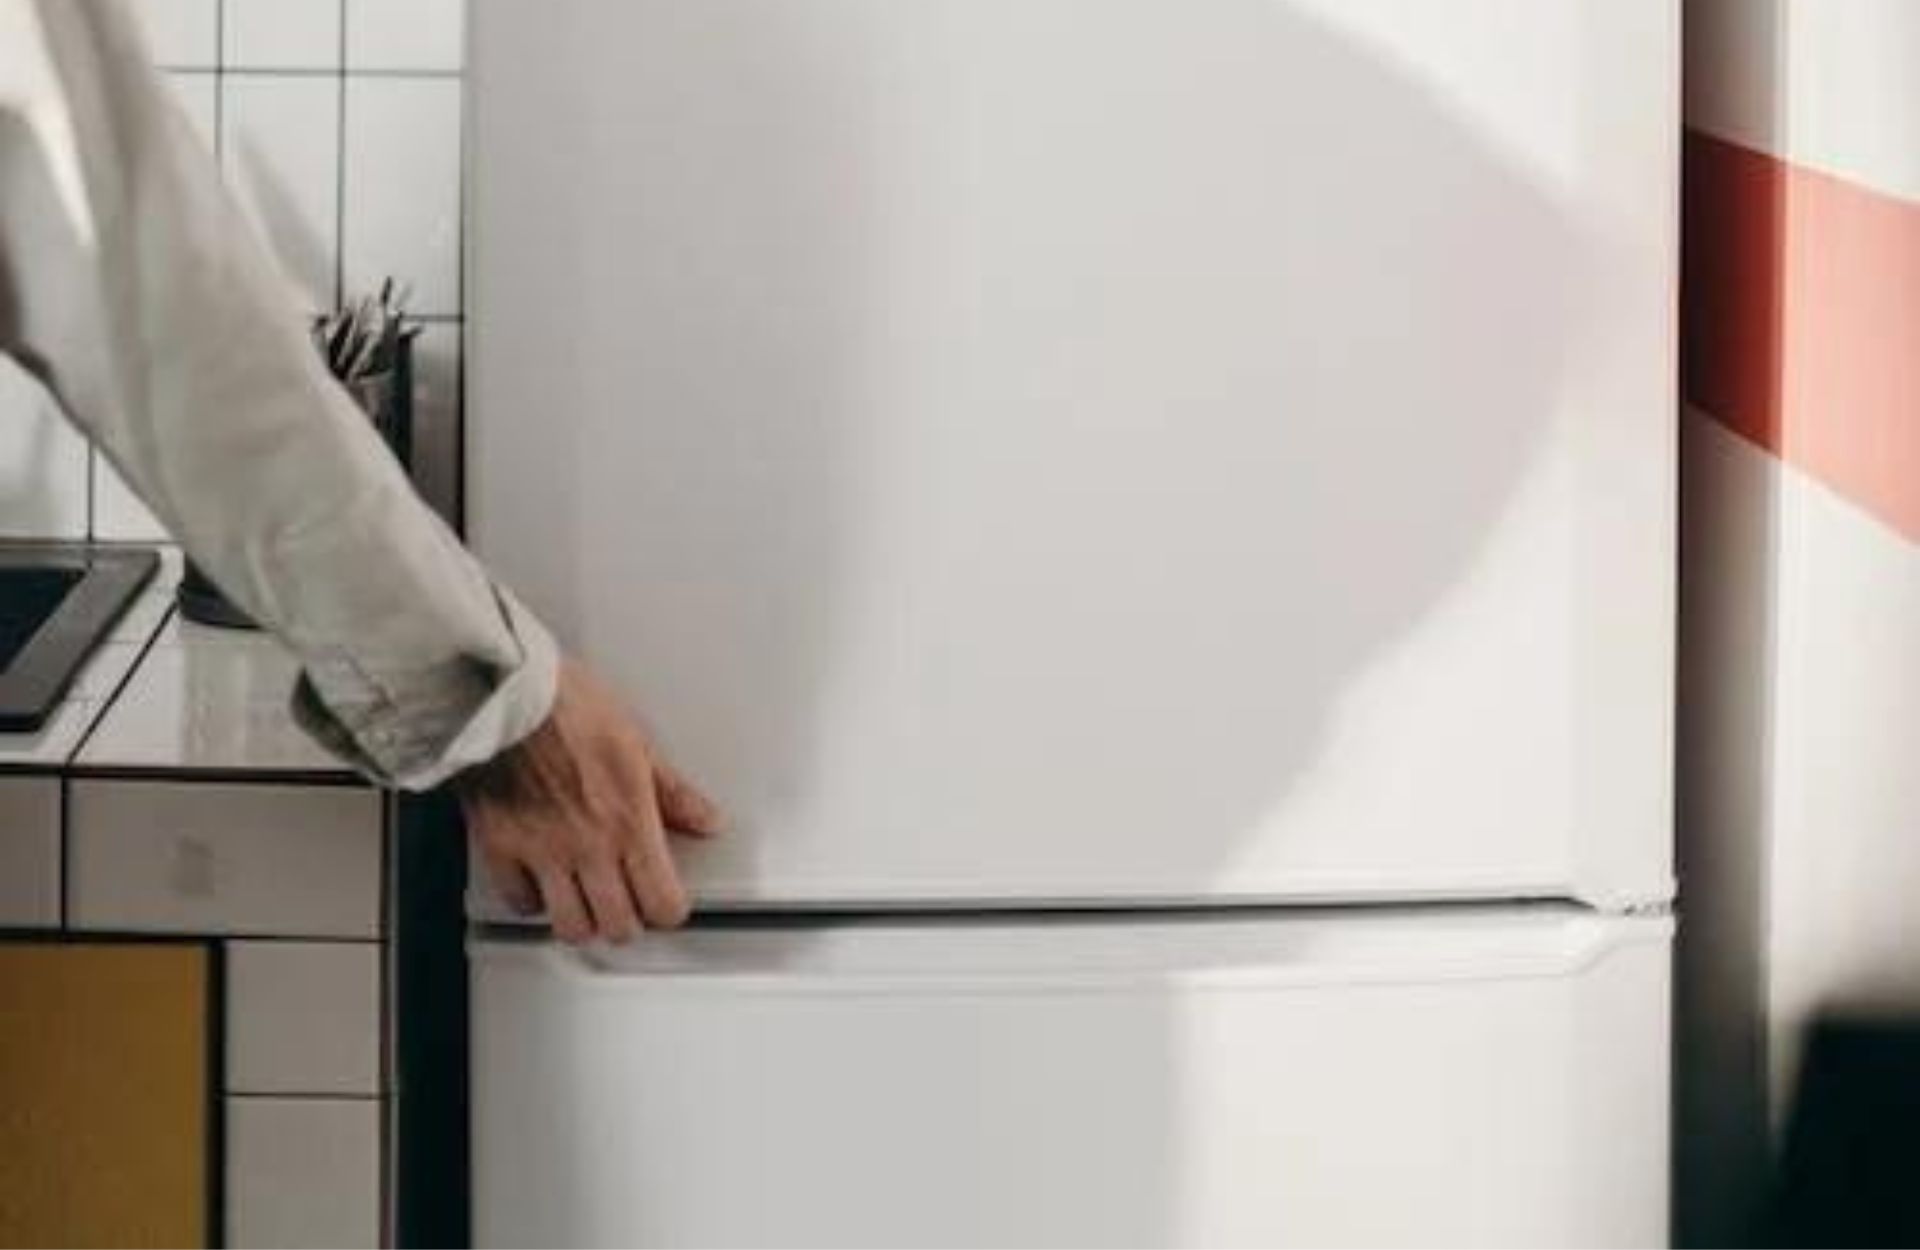 Freezer Bottom Fridge: The Ultimate Guide to Modern Refrigeration